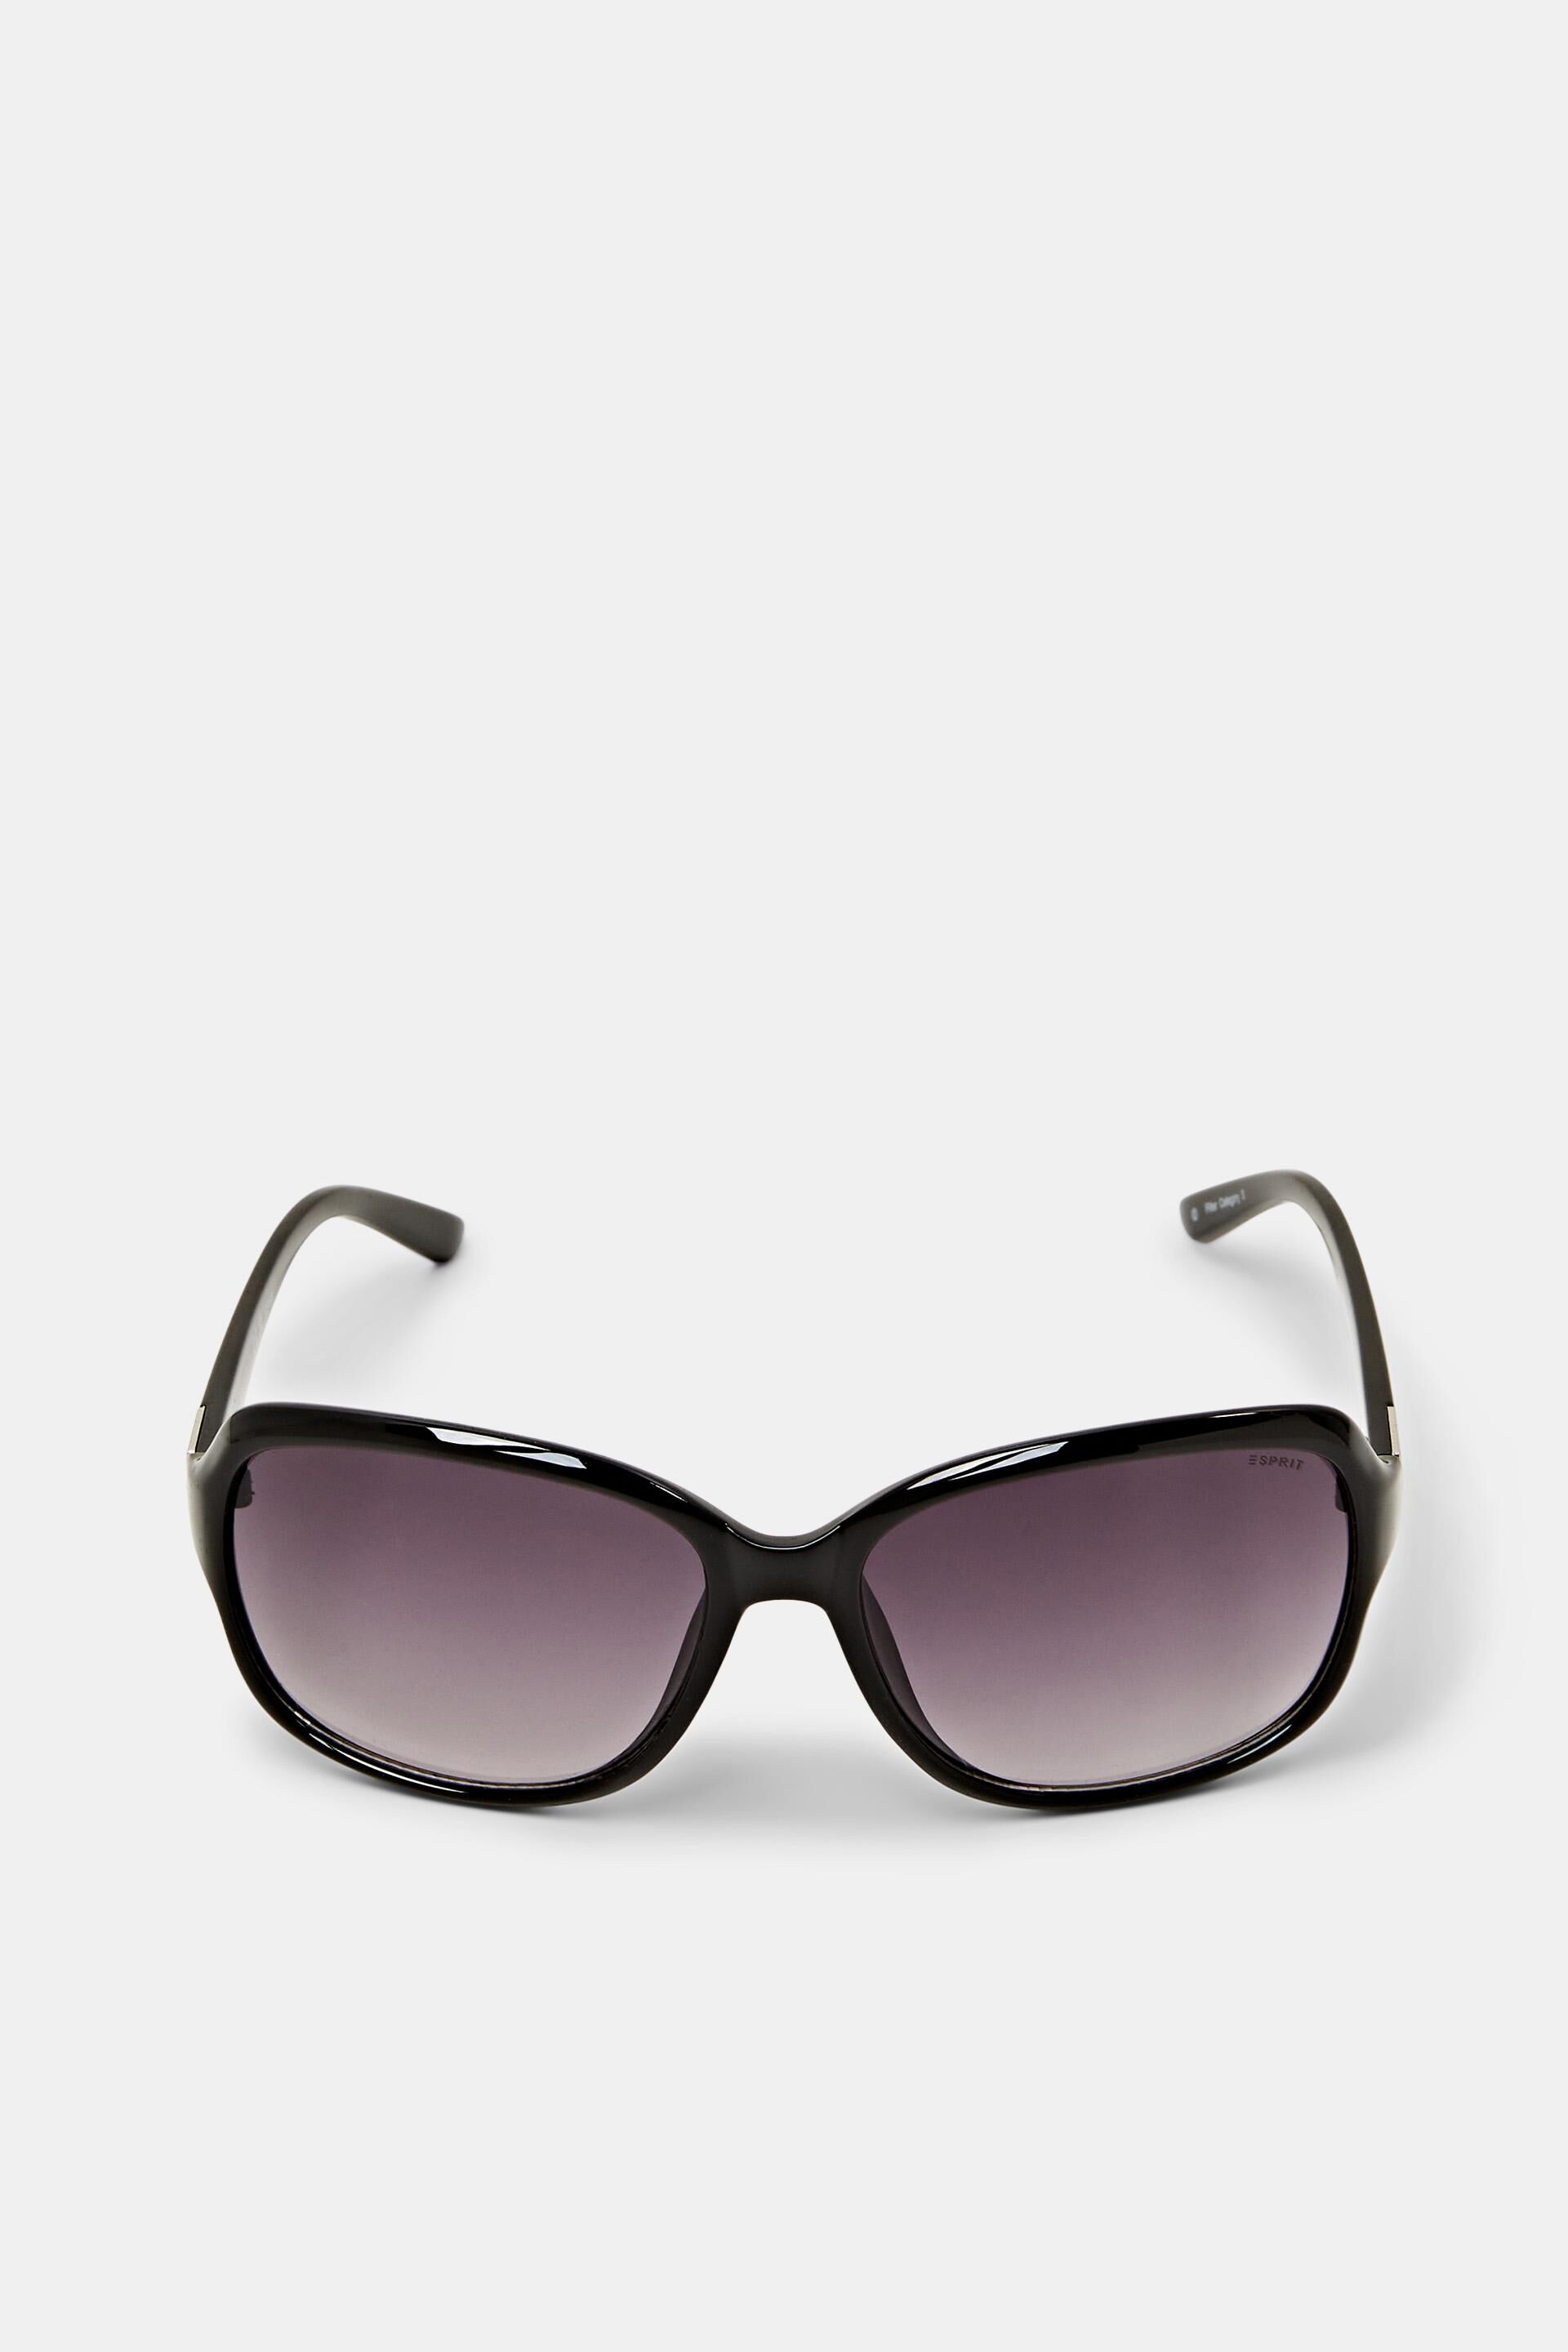 Esprit timeless Sunglasses with design a